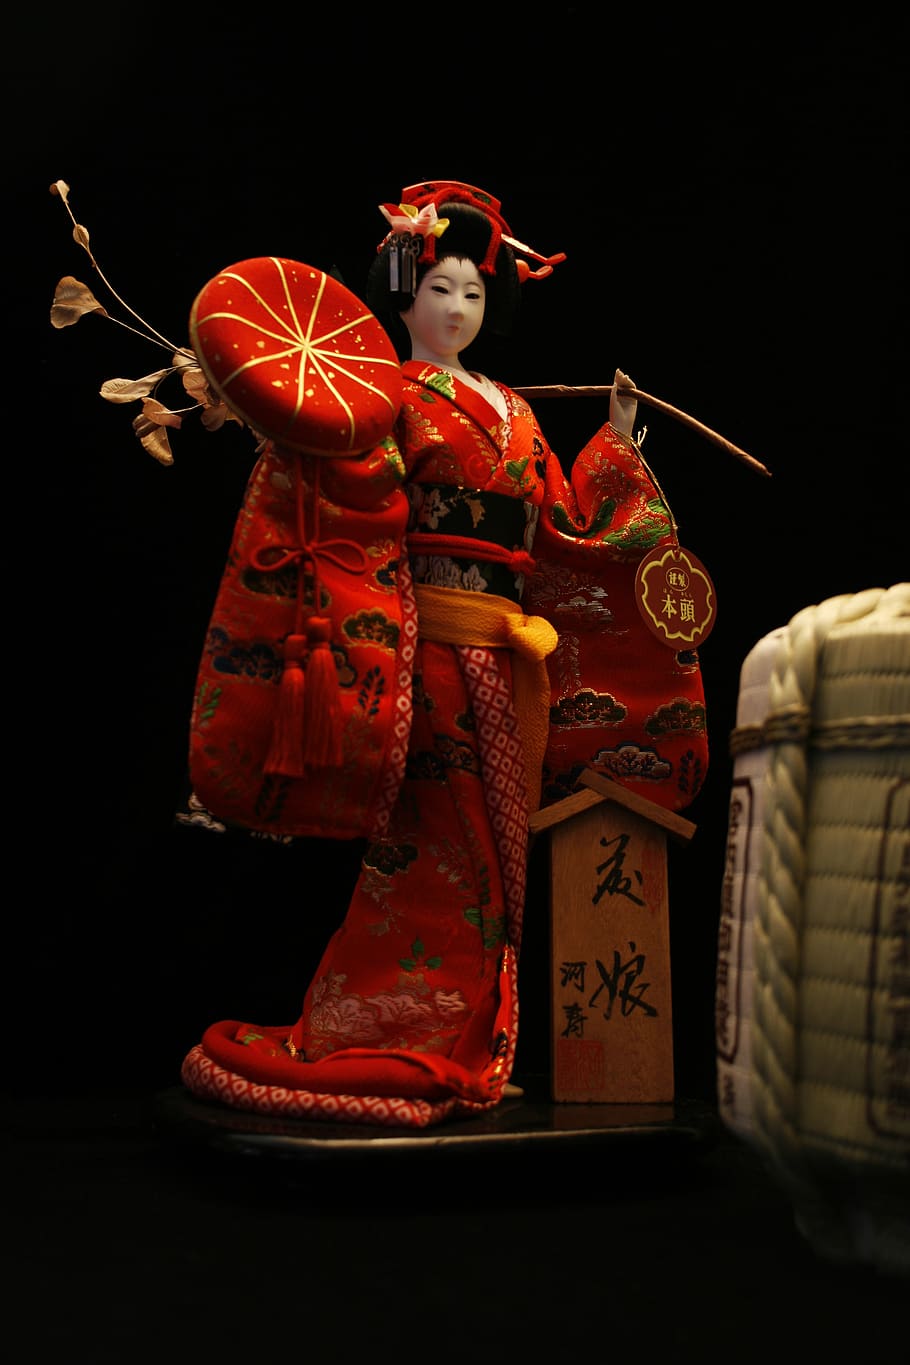 jepang, boneka, boneka jepang, kimono, budaya, asia, sake, dalam ruangan, satu orang, pakaian